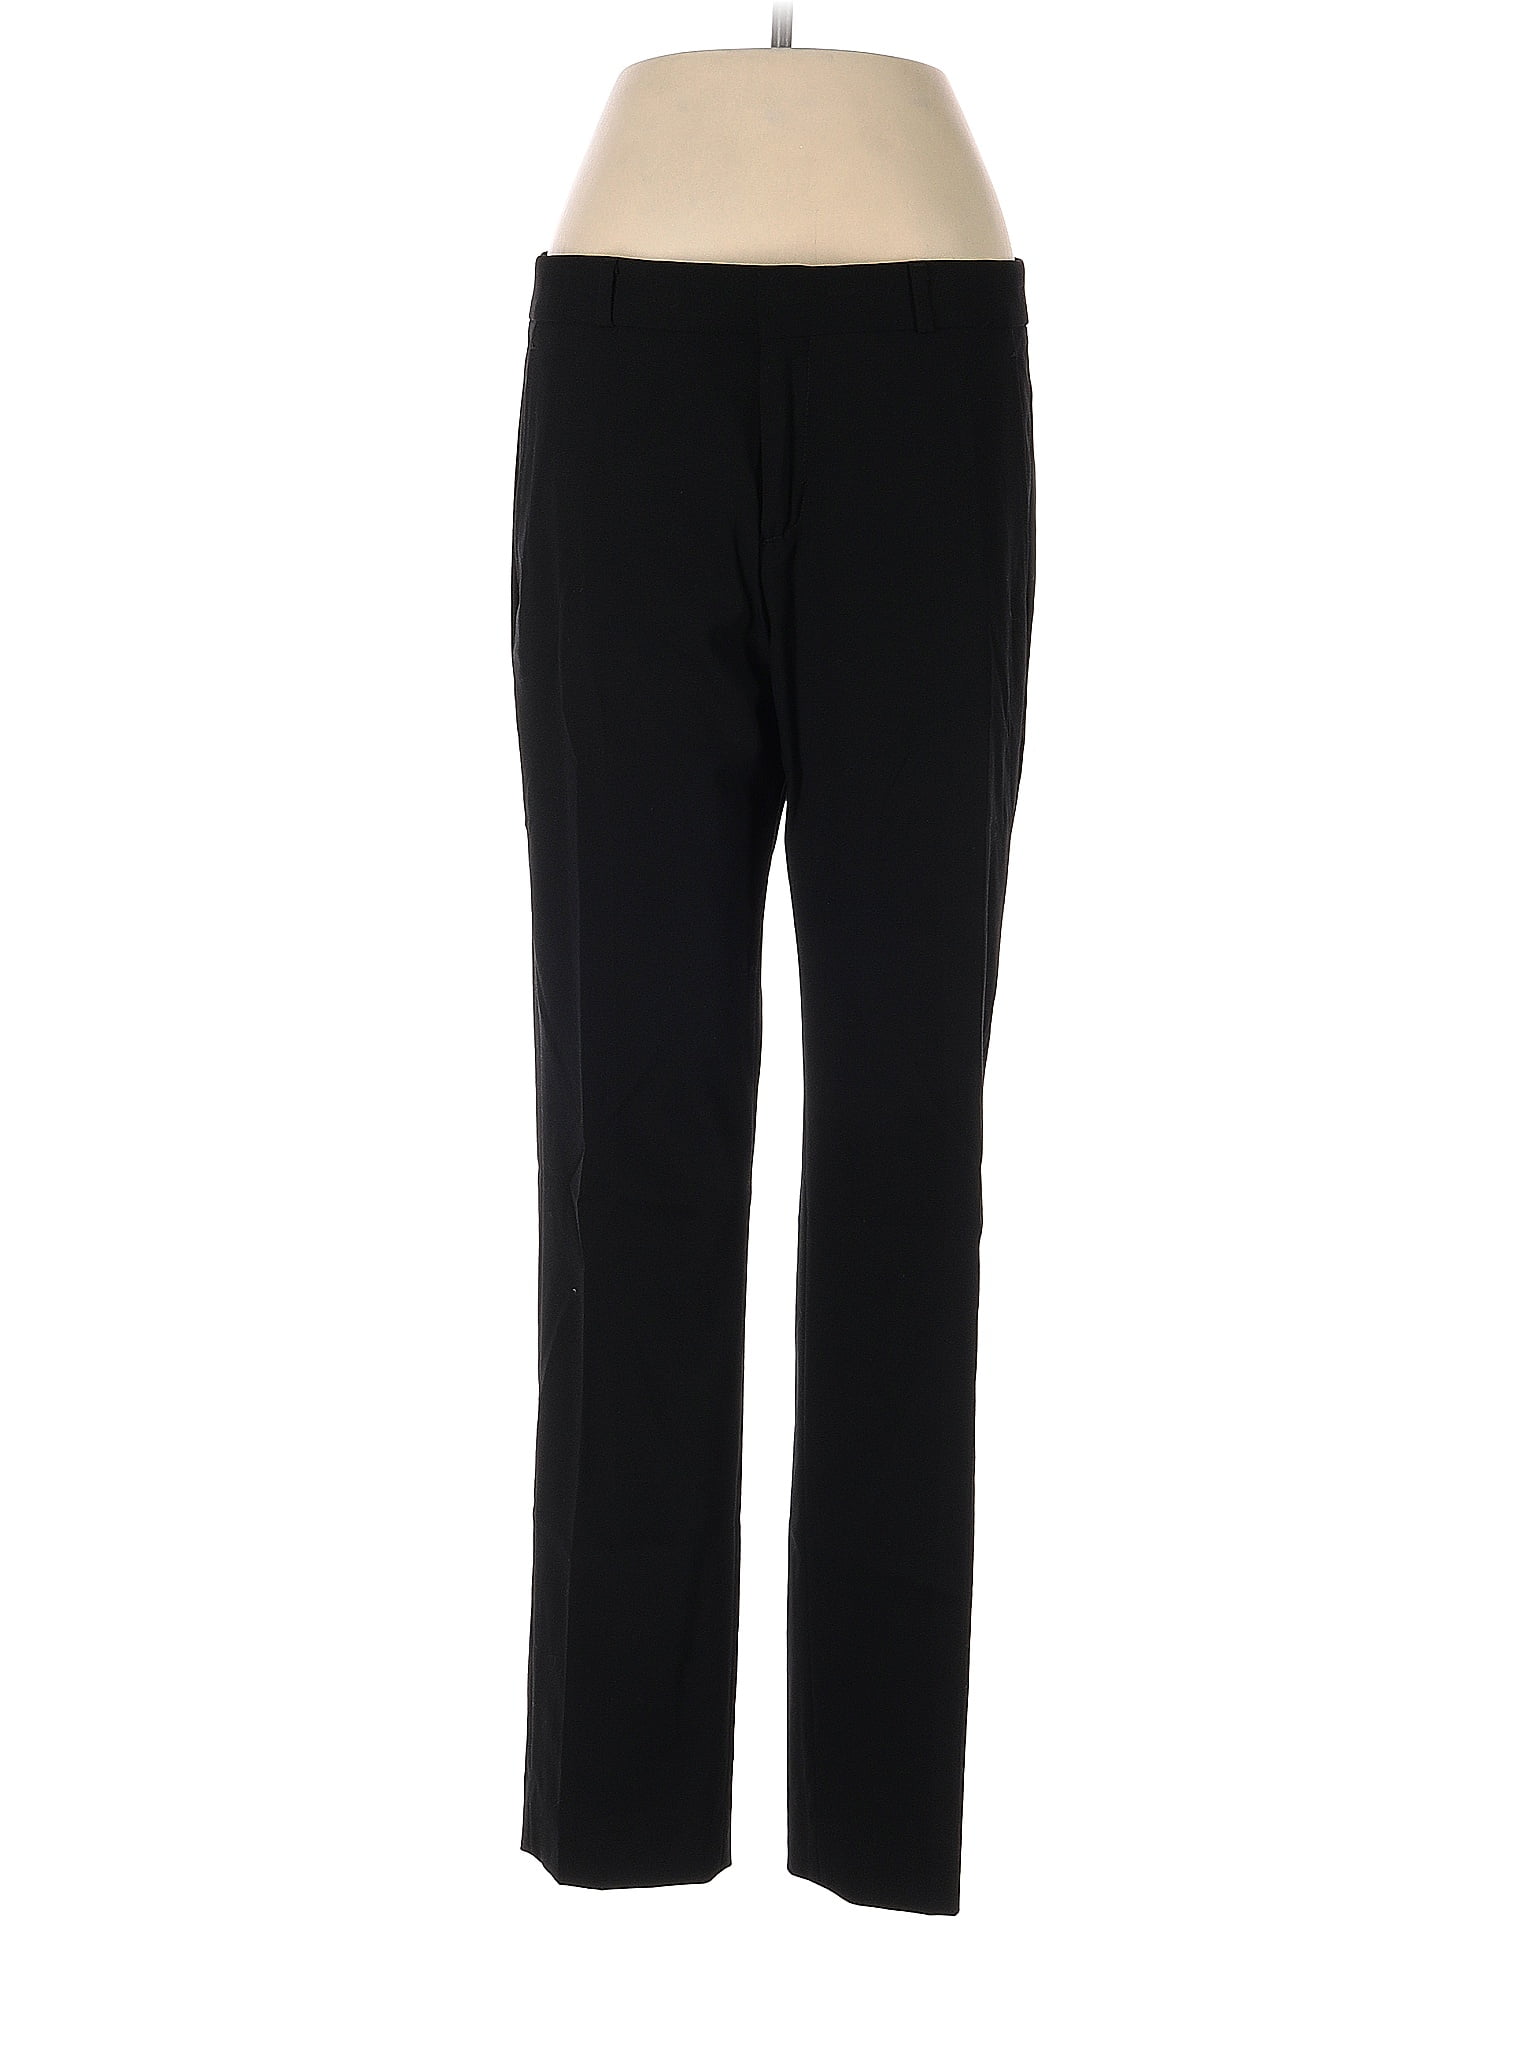 Banana Republic Solid Black Wool Pants Size 6 - 82% off | thredUP